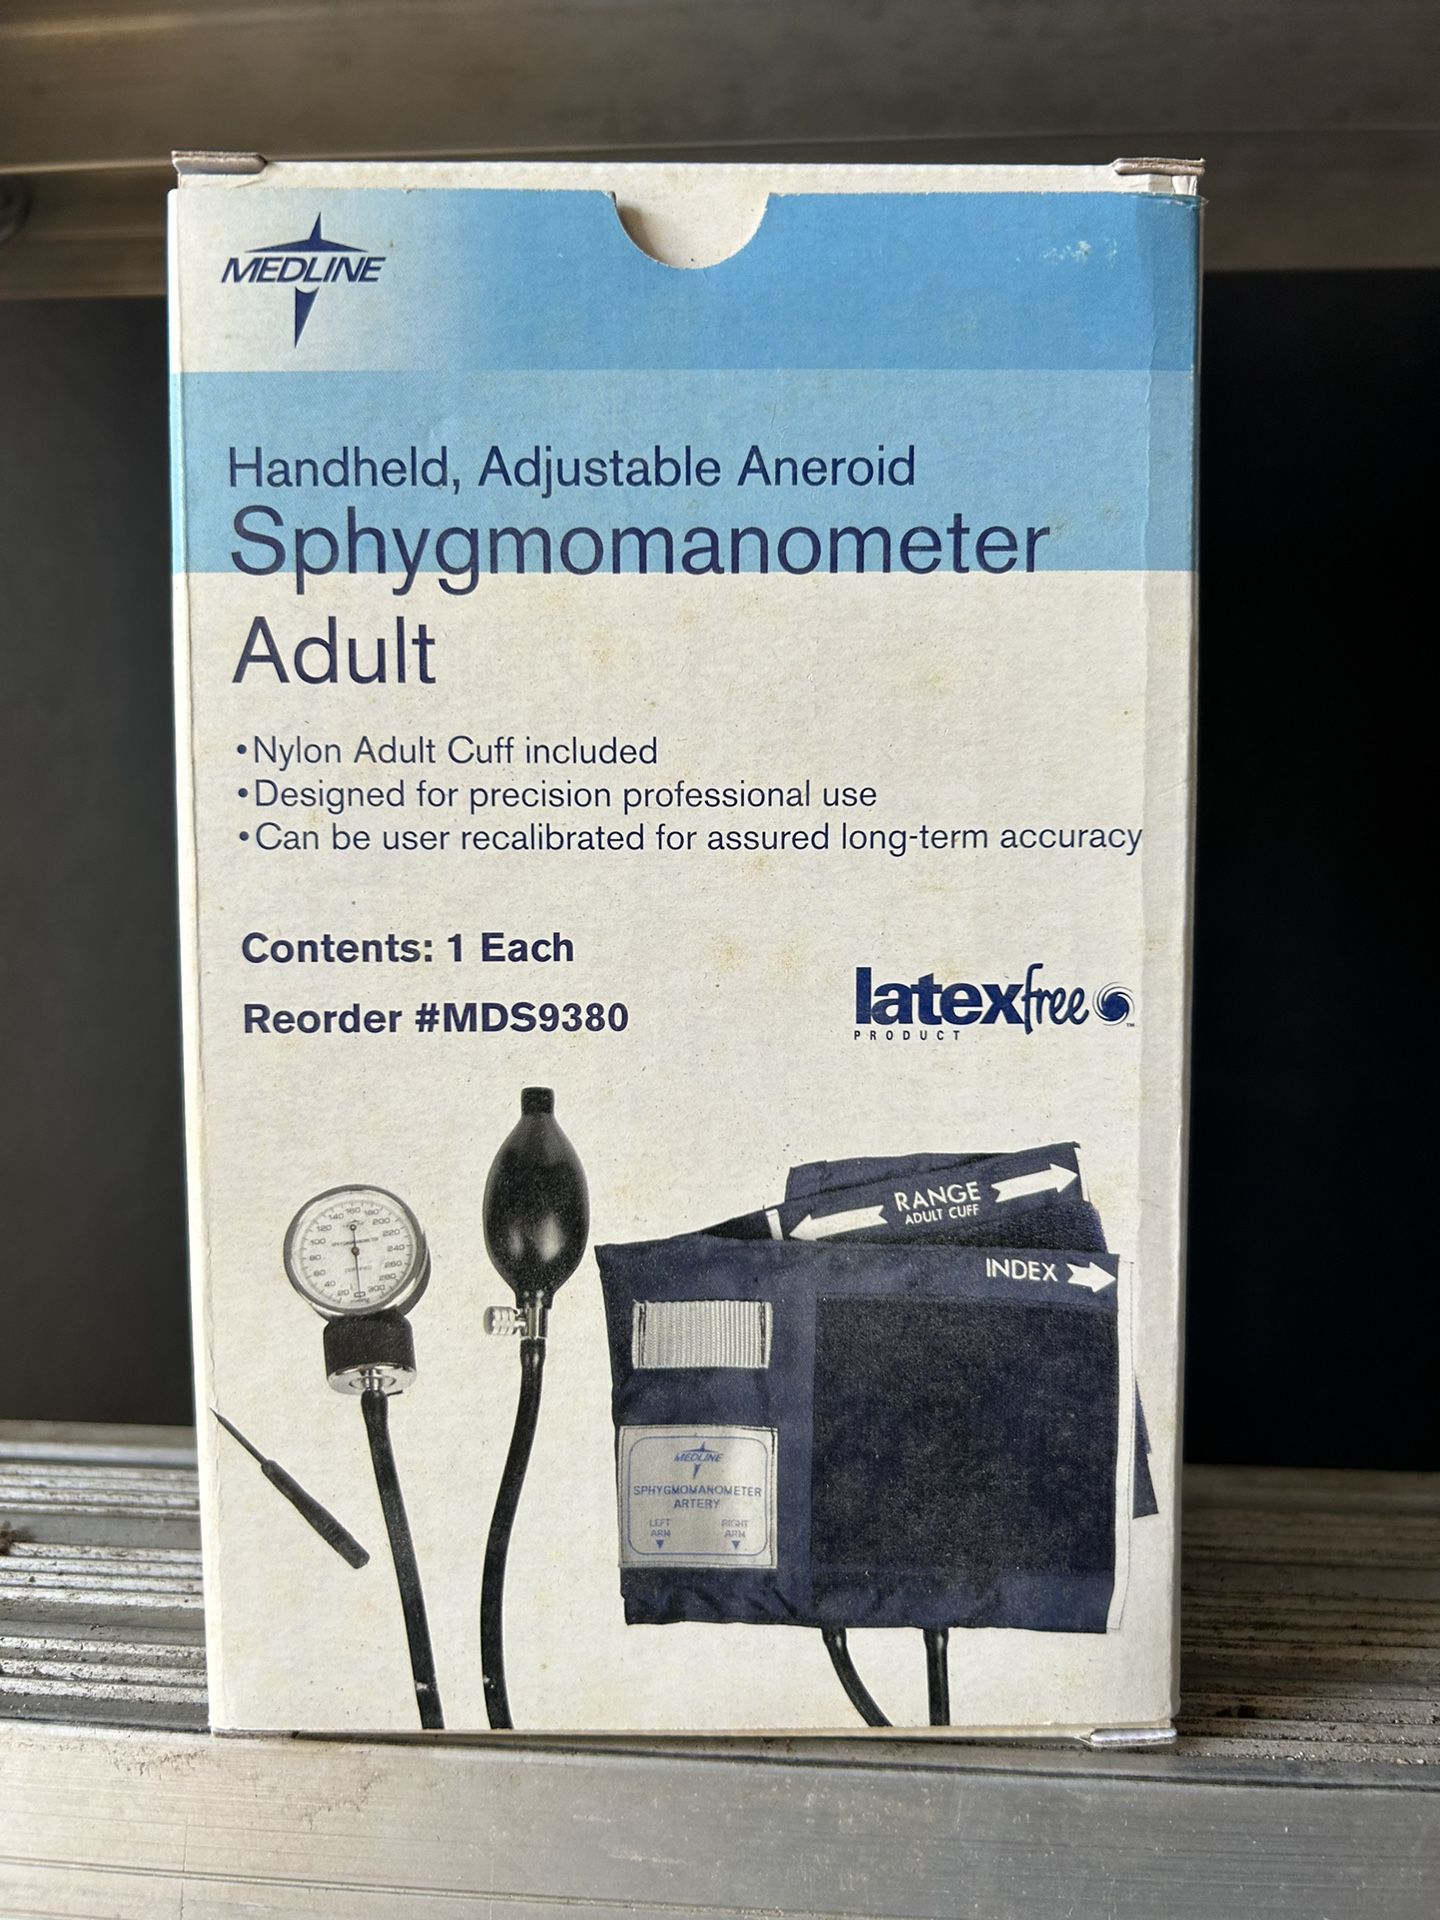 Medline Handheld Adjustable Aneroid Sphygmomanometer Adult